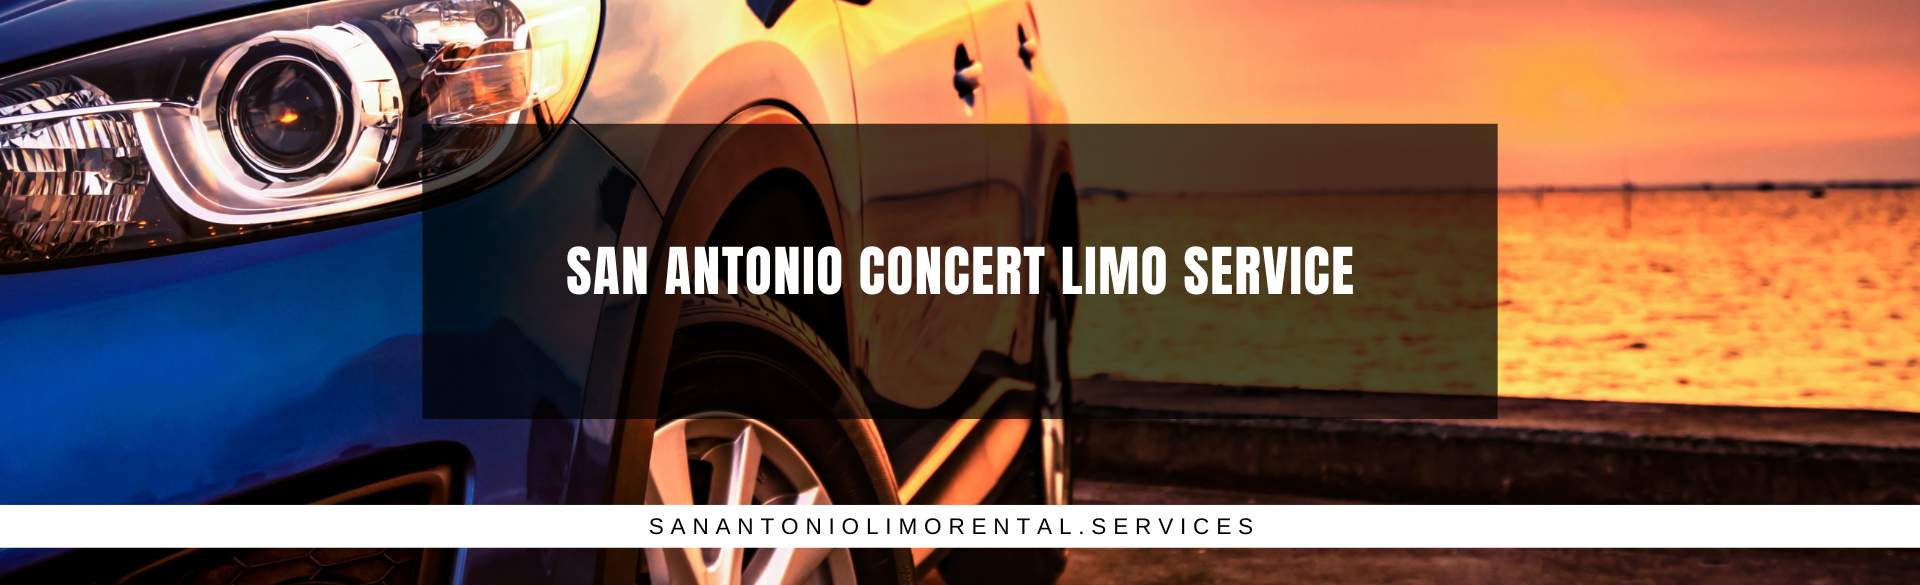 San Antonio Concert Limo Service